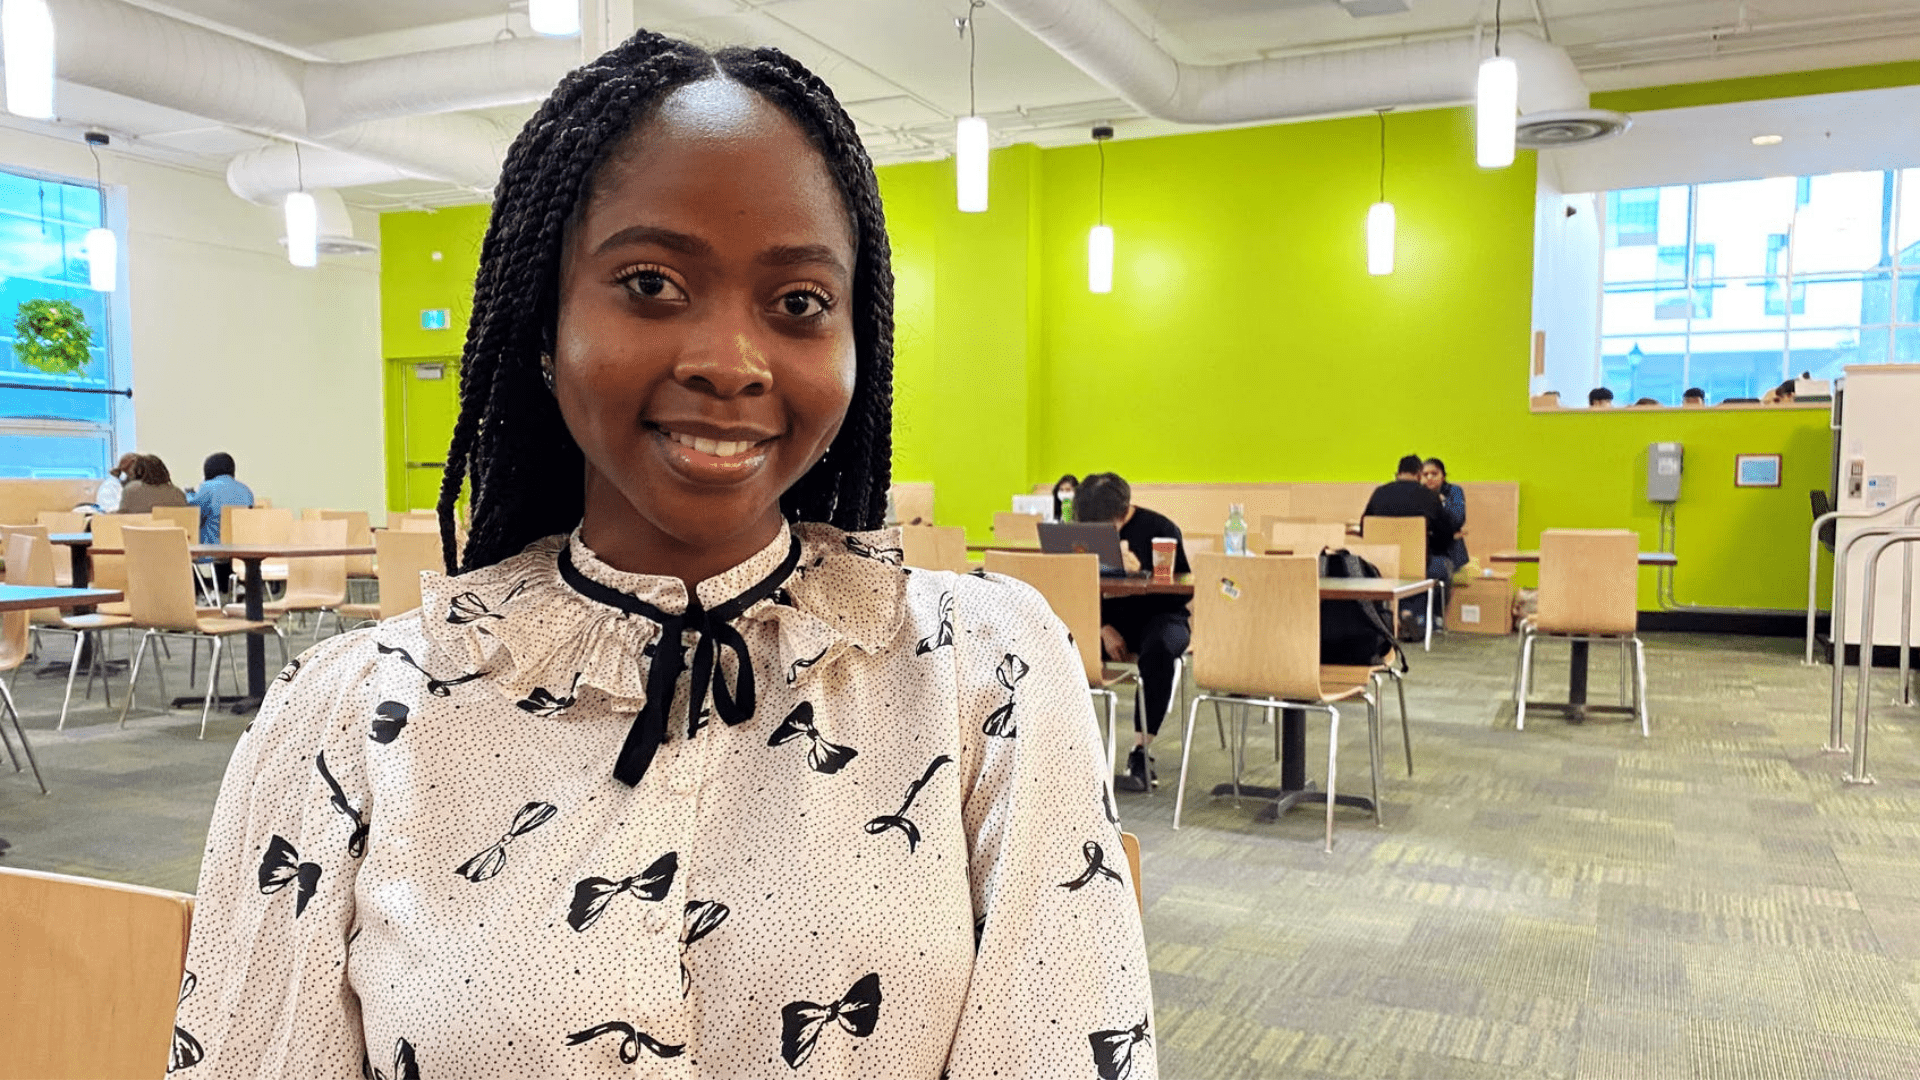 Black girls gather to break down barriers, build successful careers in Nova Scotia